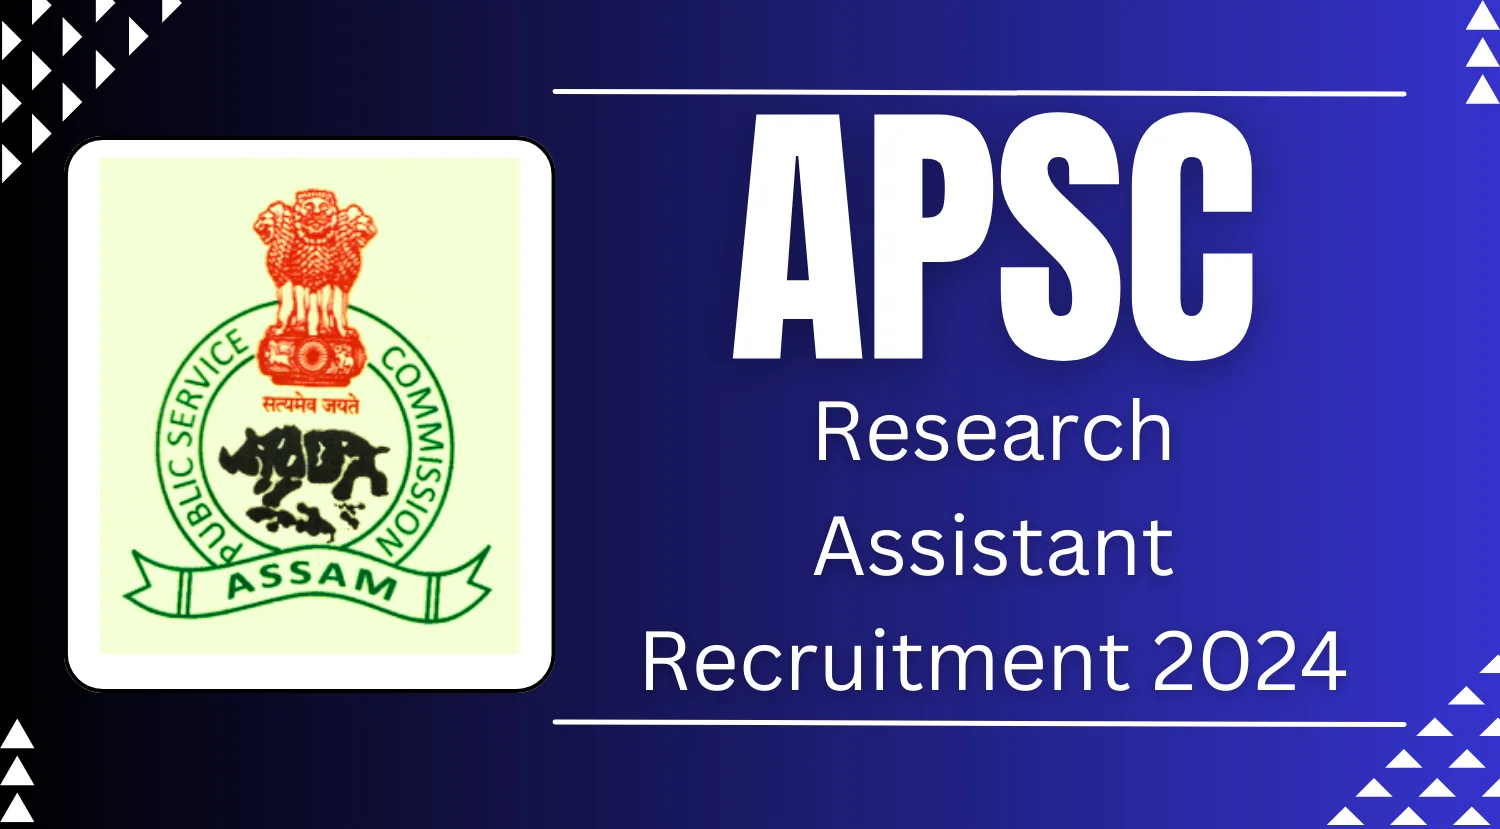 APSC Research Assistant Recruitment 2024 Online Application Begins on 29th April